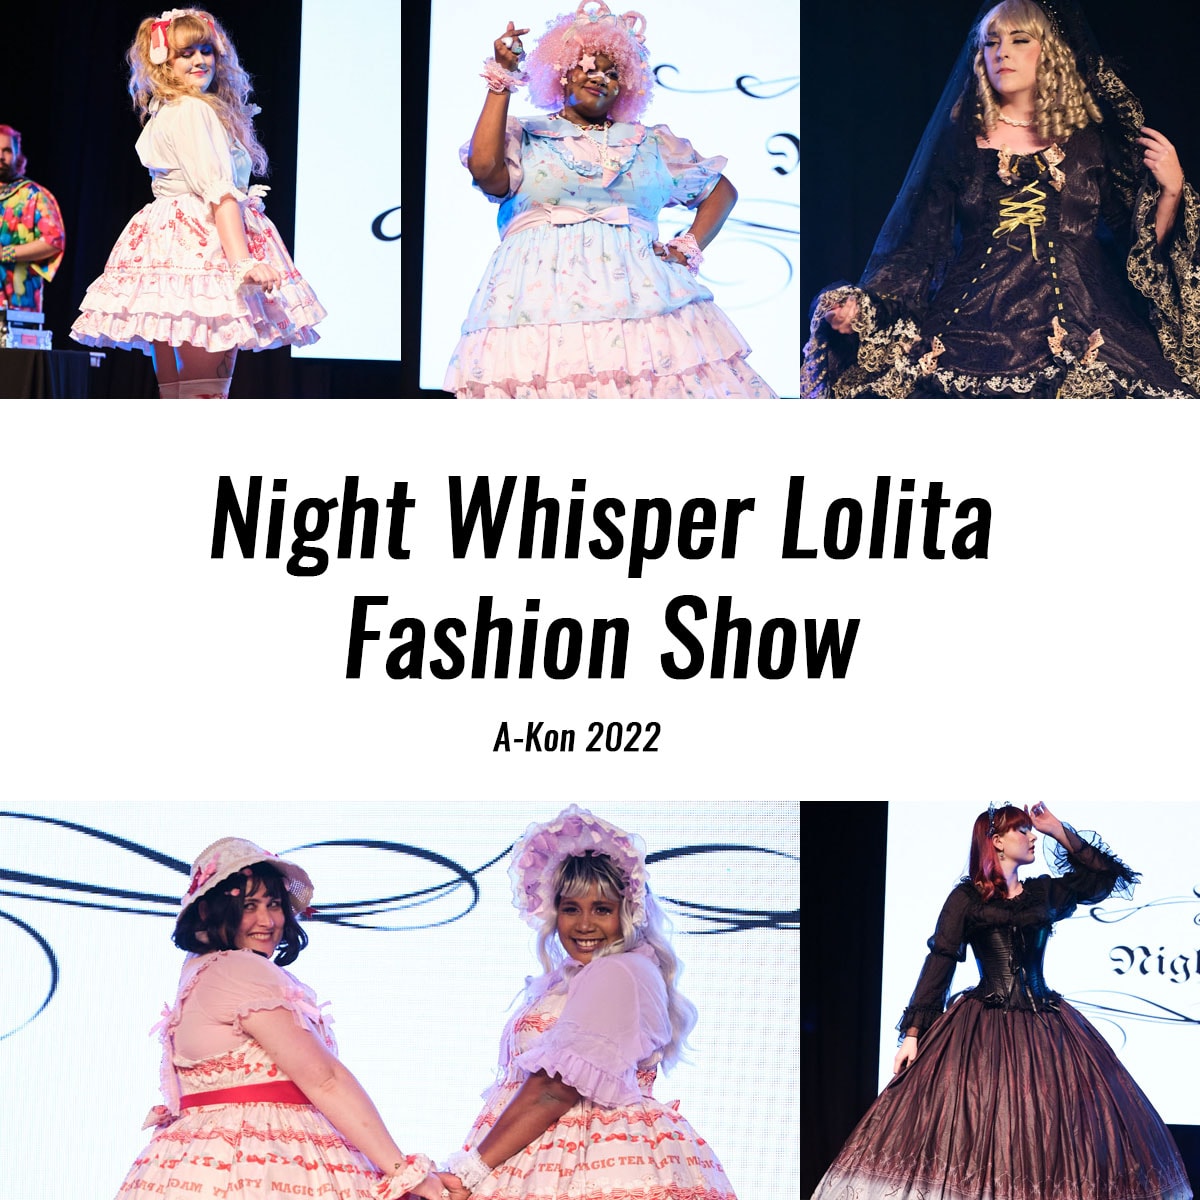 Night Whisper Lolita Fashion Show at A-Kon